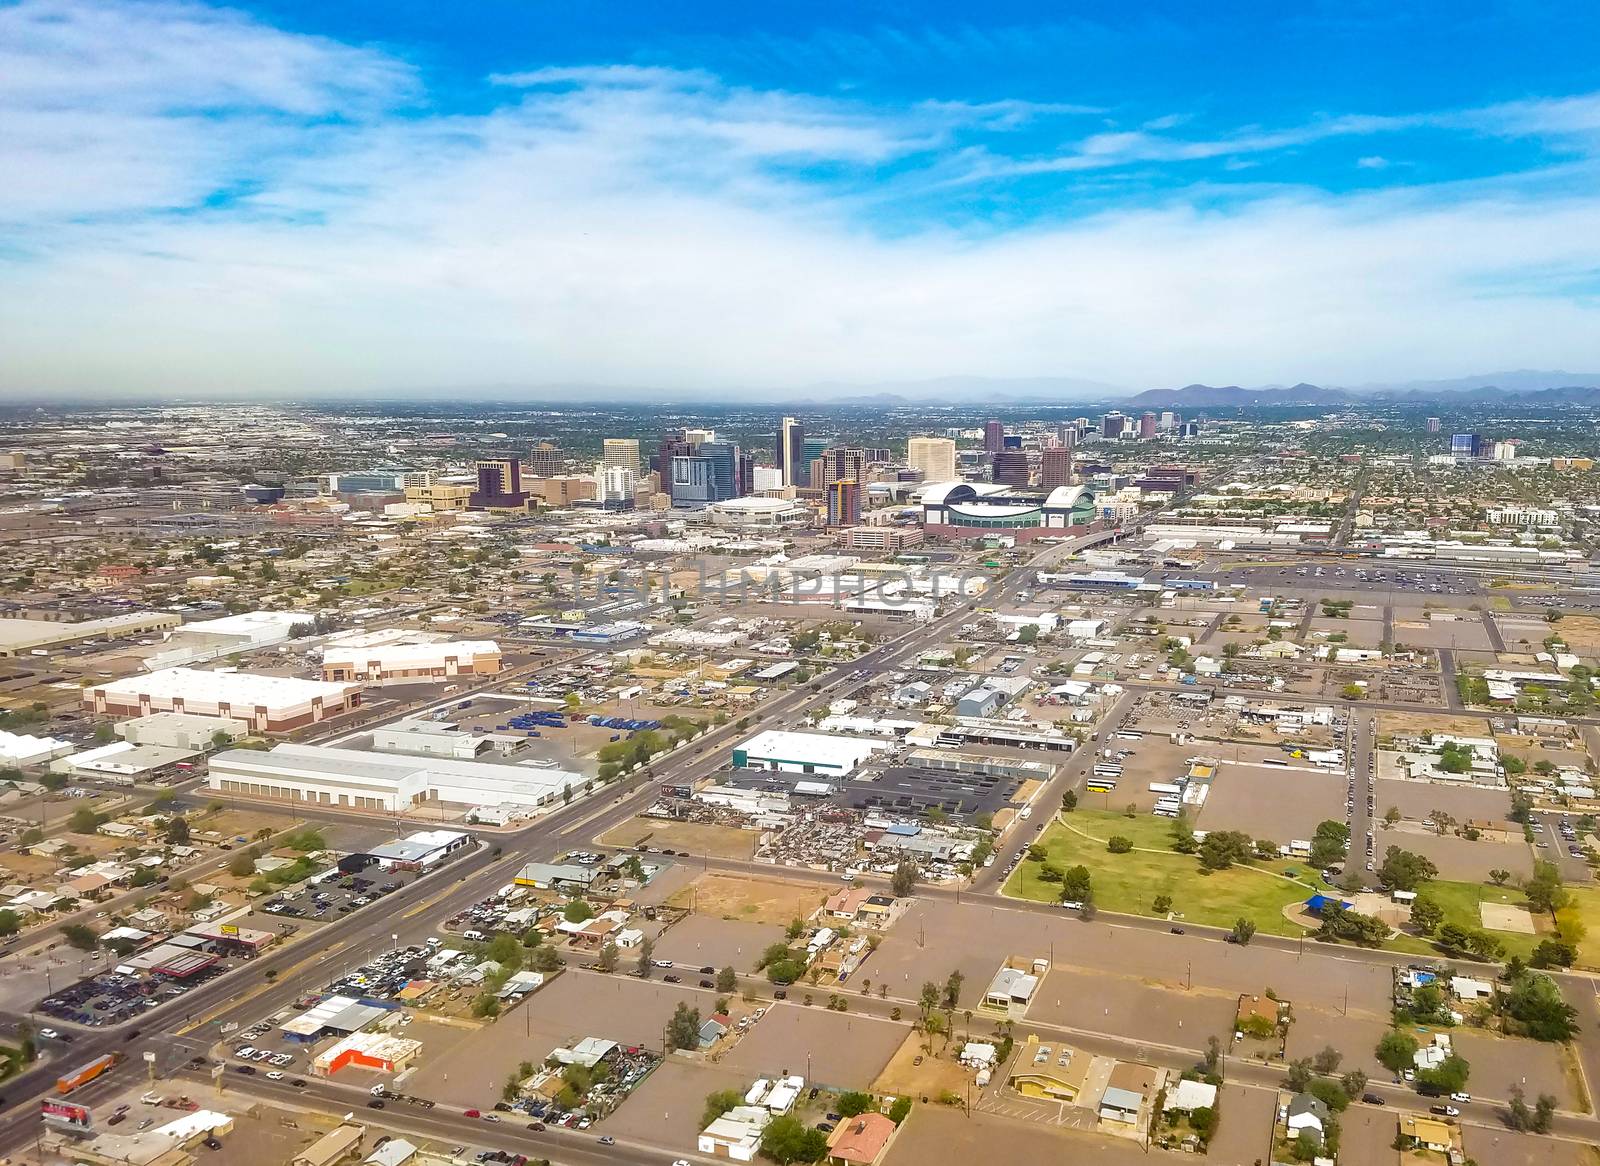 Downtown Phoenix, Arizona by whitechild